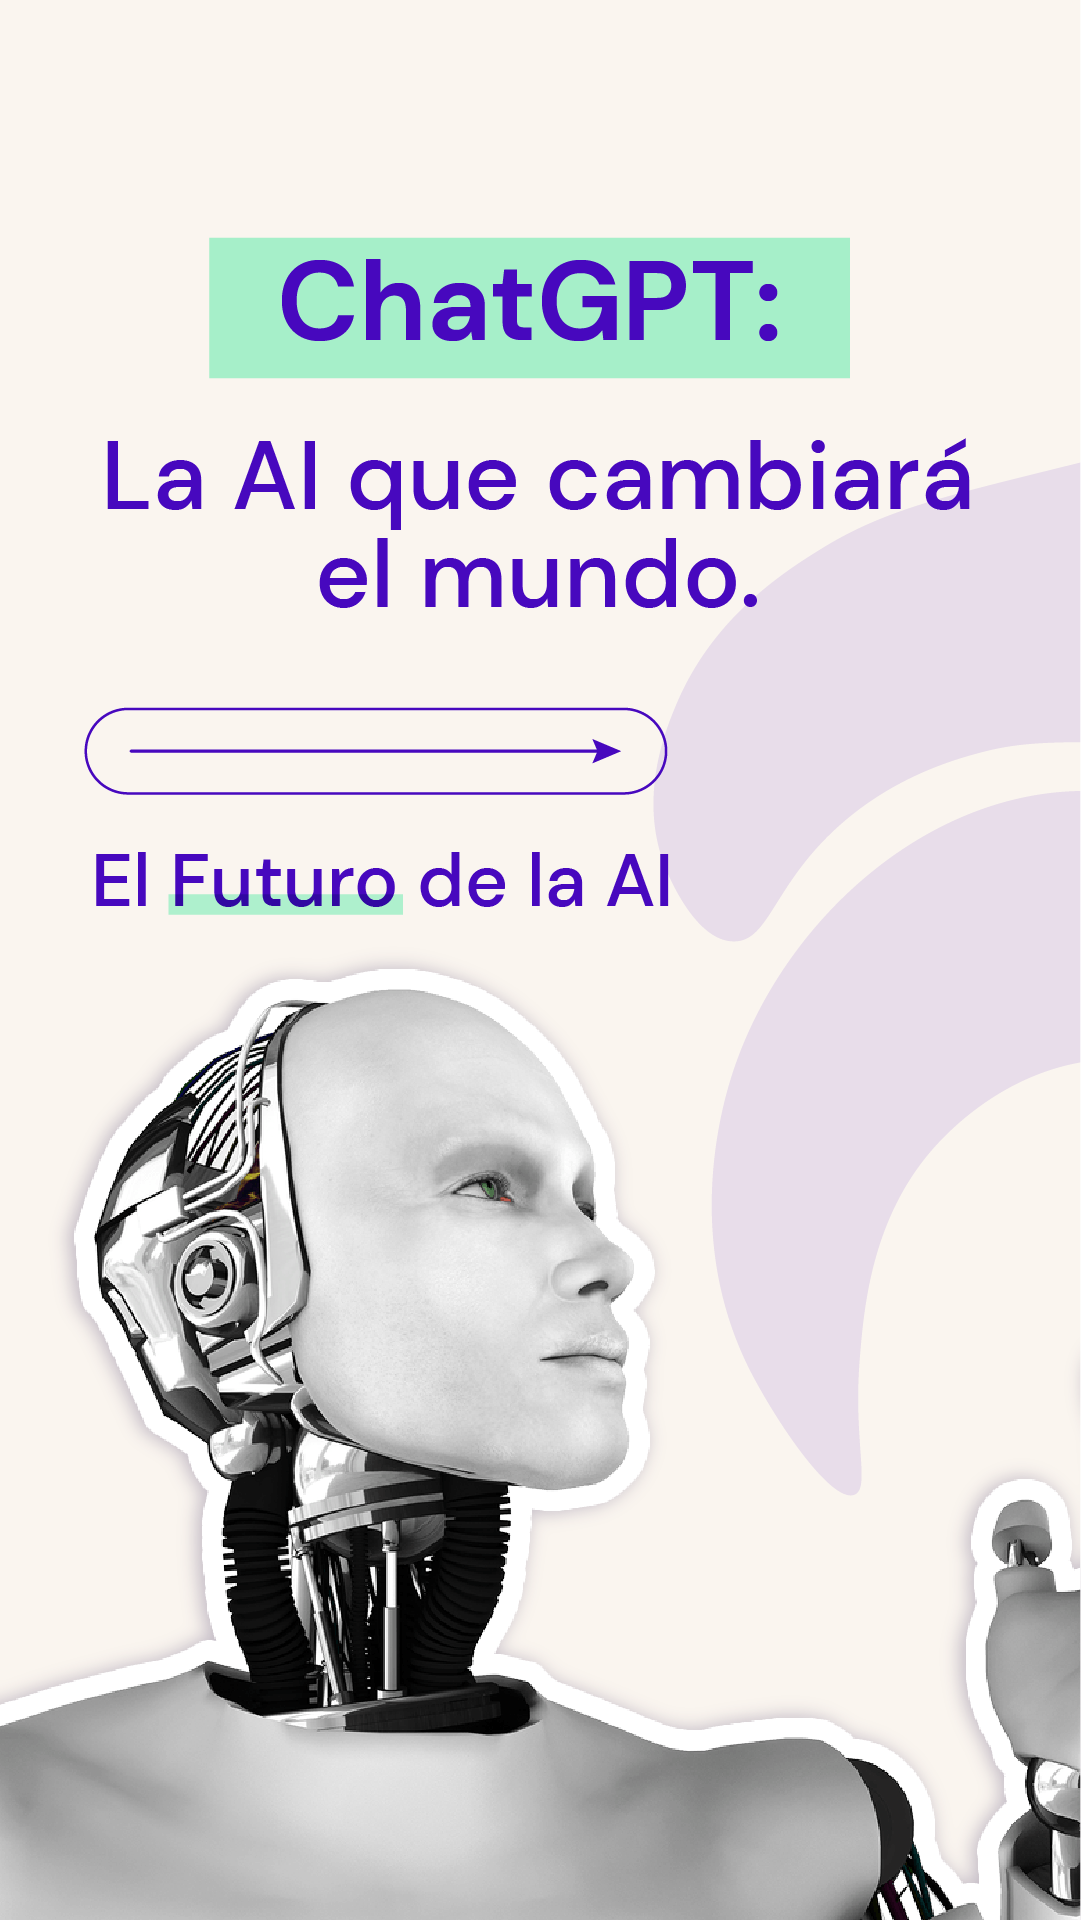 El Futuro de la AI